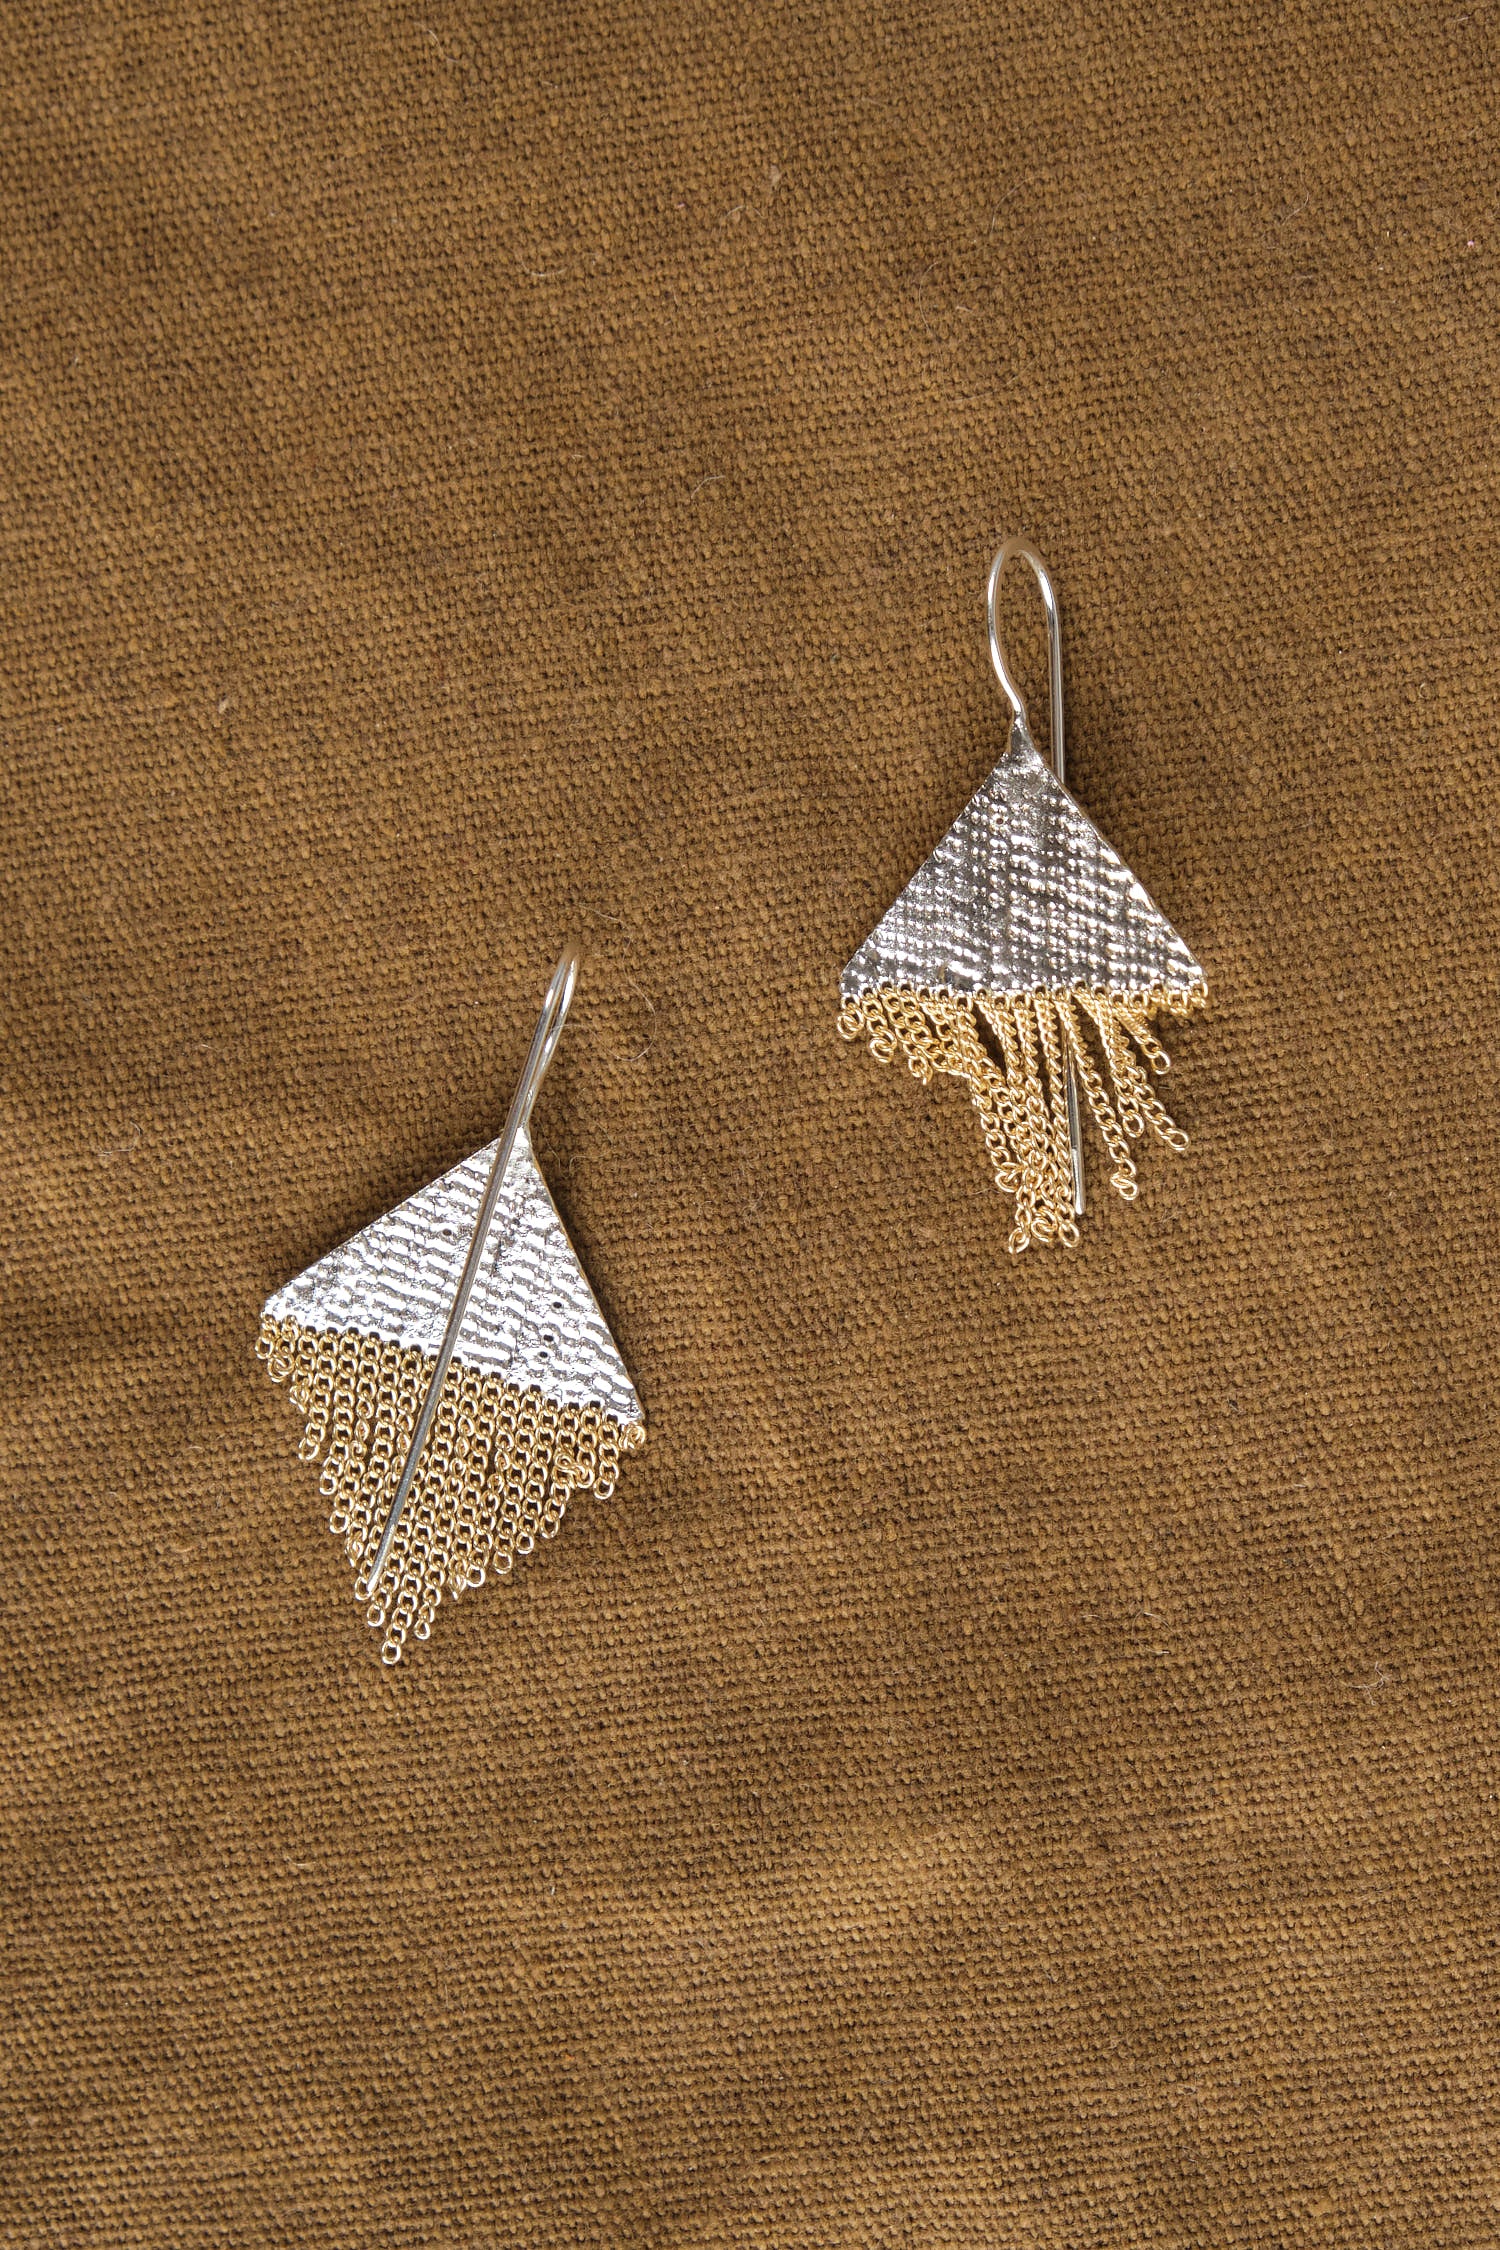 925 Silver Bohemian Style Retro 3D Handmade Triangle Tassel Earrings   lightofjuwelen